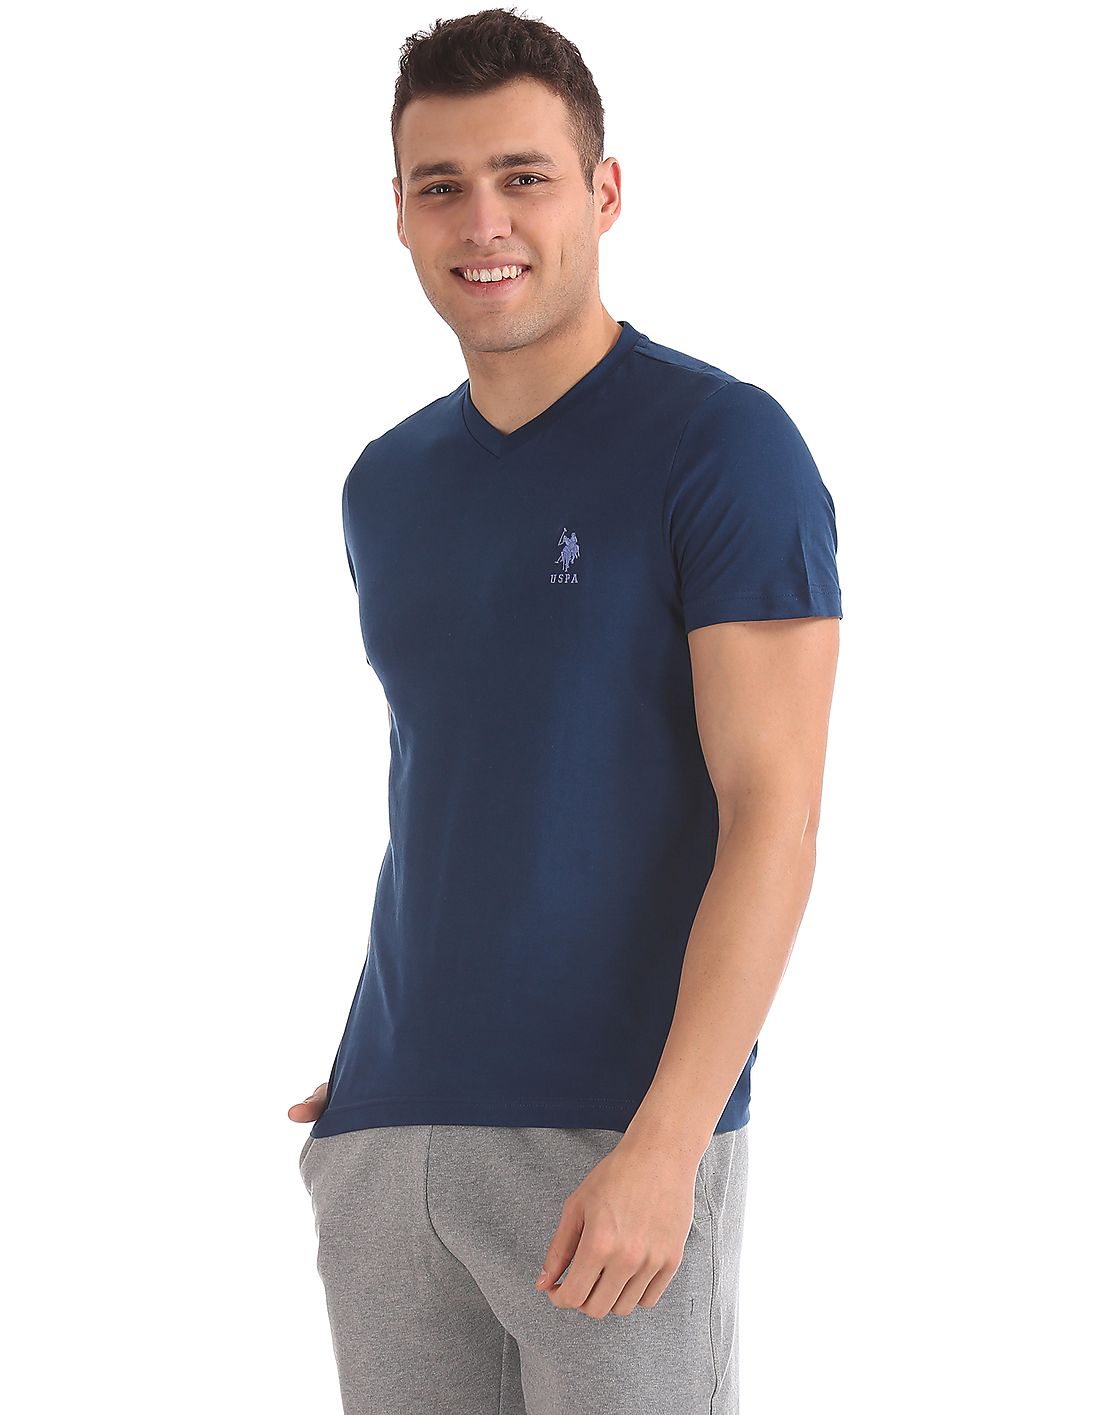 U.S. Polo Assn. Casual Short Sleeve V-Neck T-Shirt Blue - Stilento